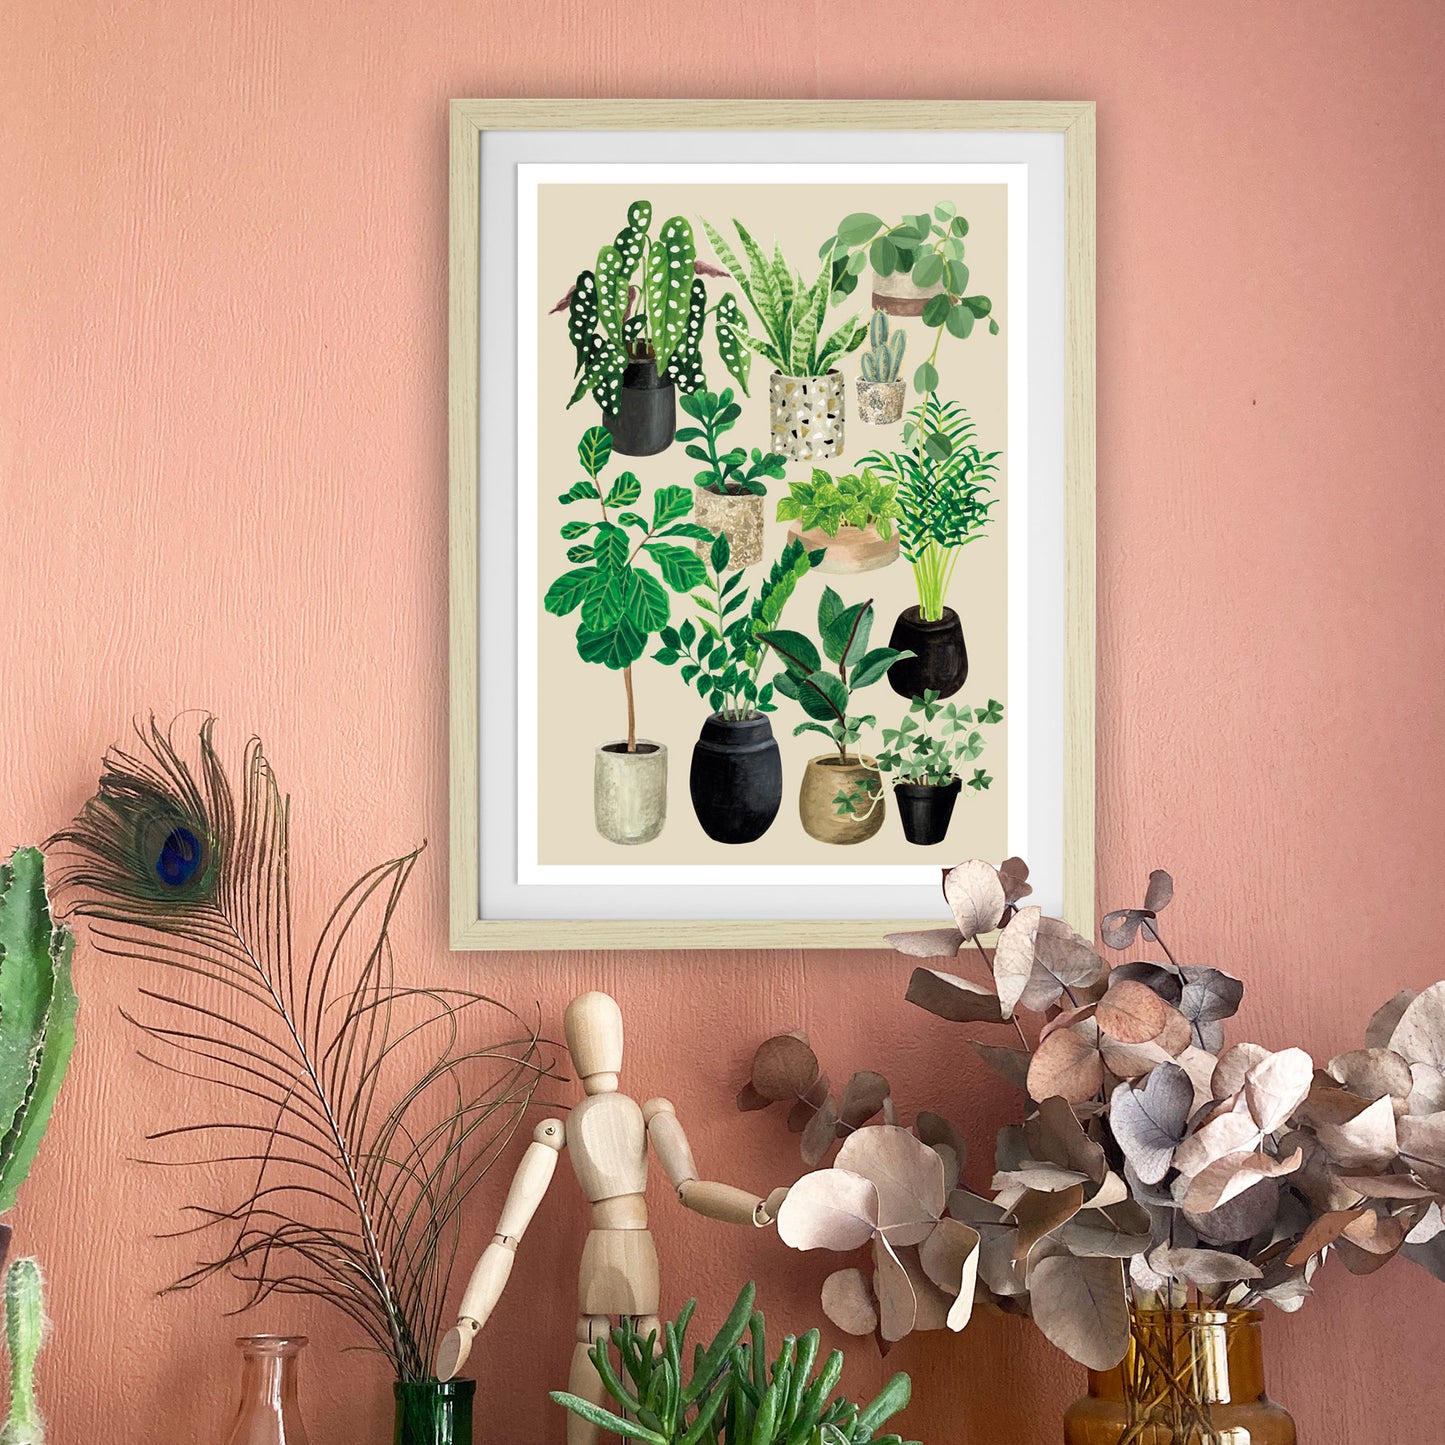 Poster Love of plants - chalk